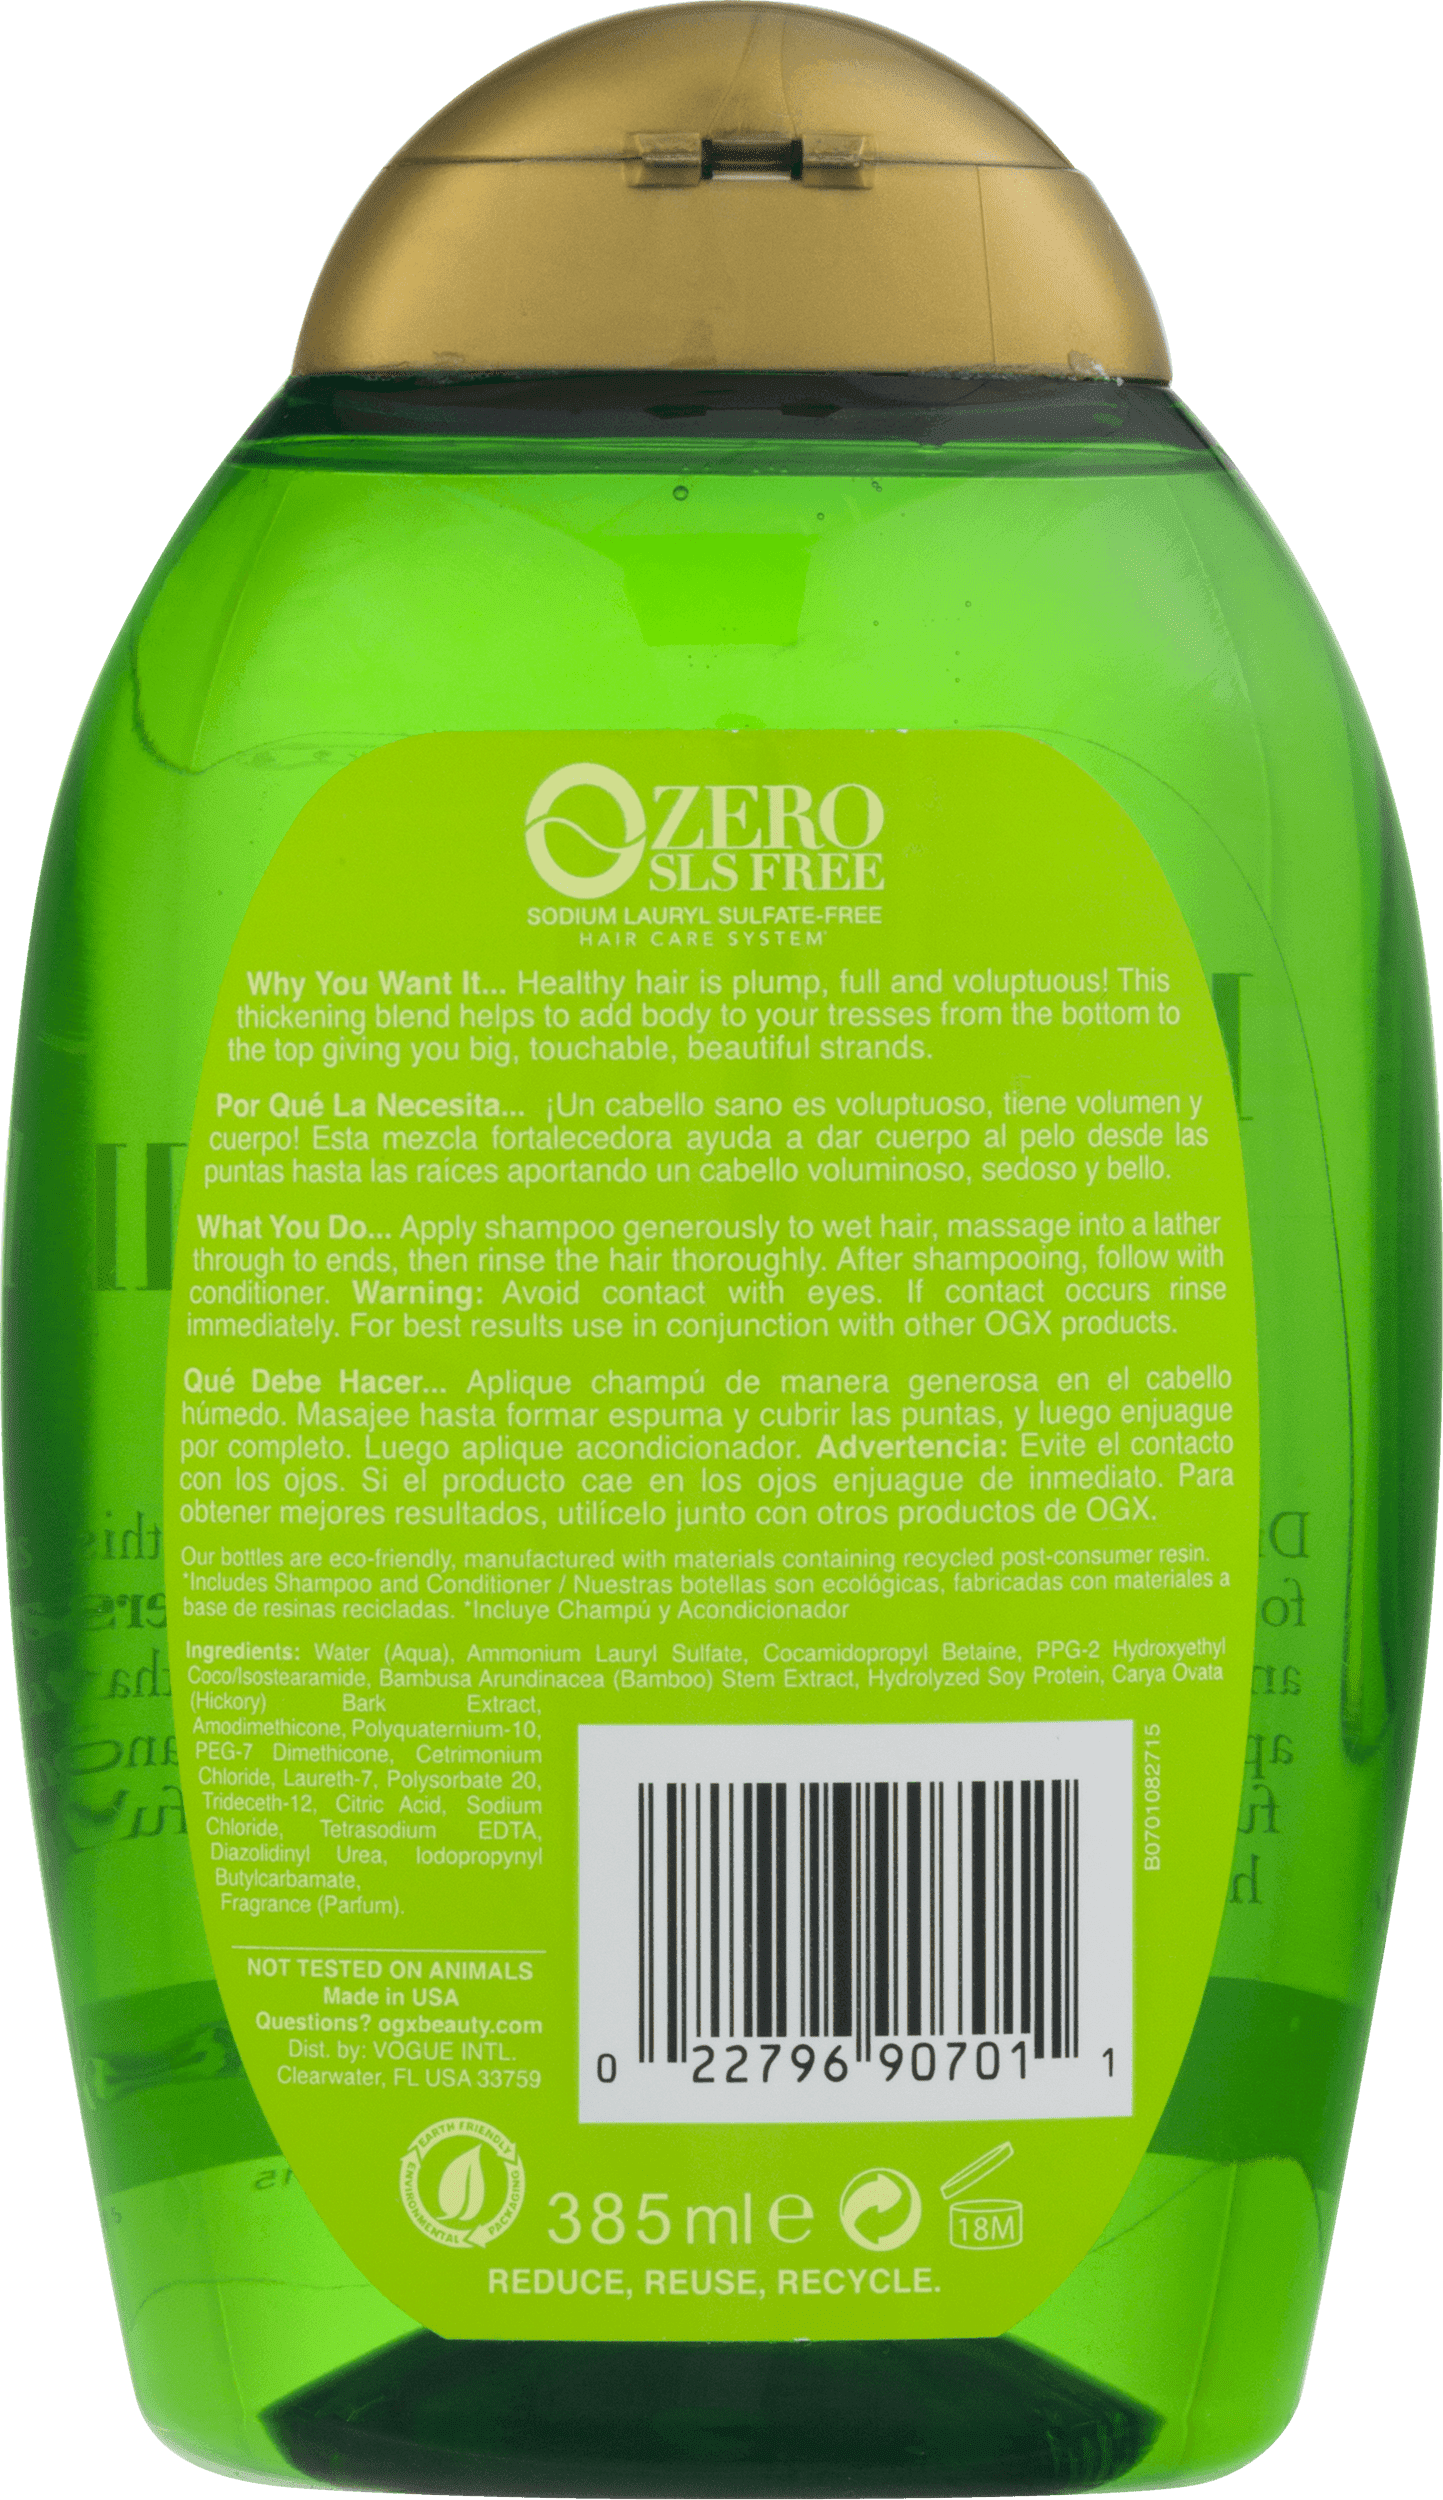 OGX Strength & Body Bamboo Fiber-Full Shampoo, Oz -